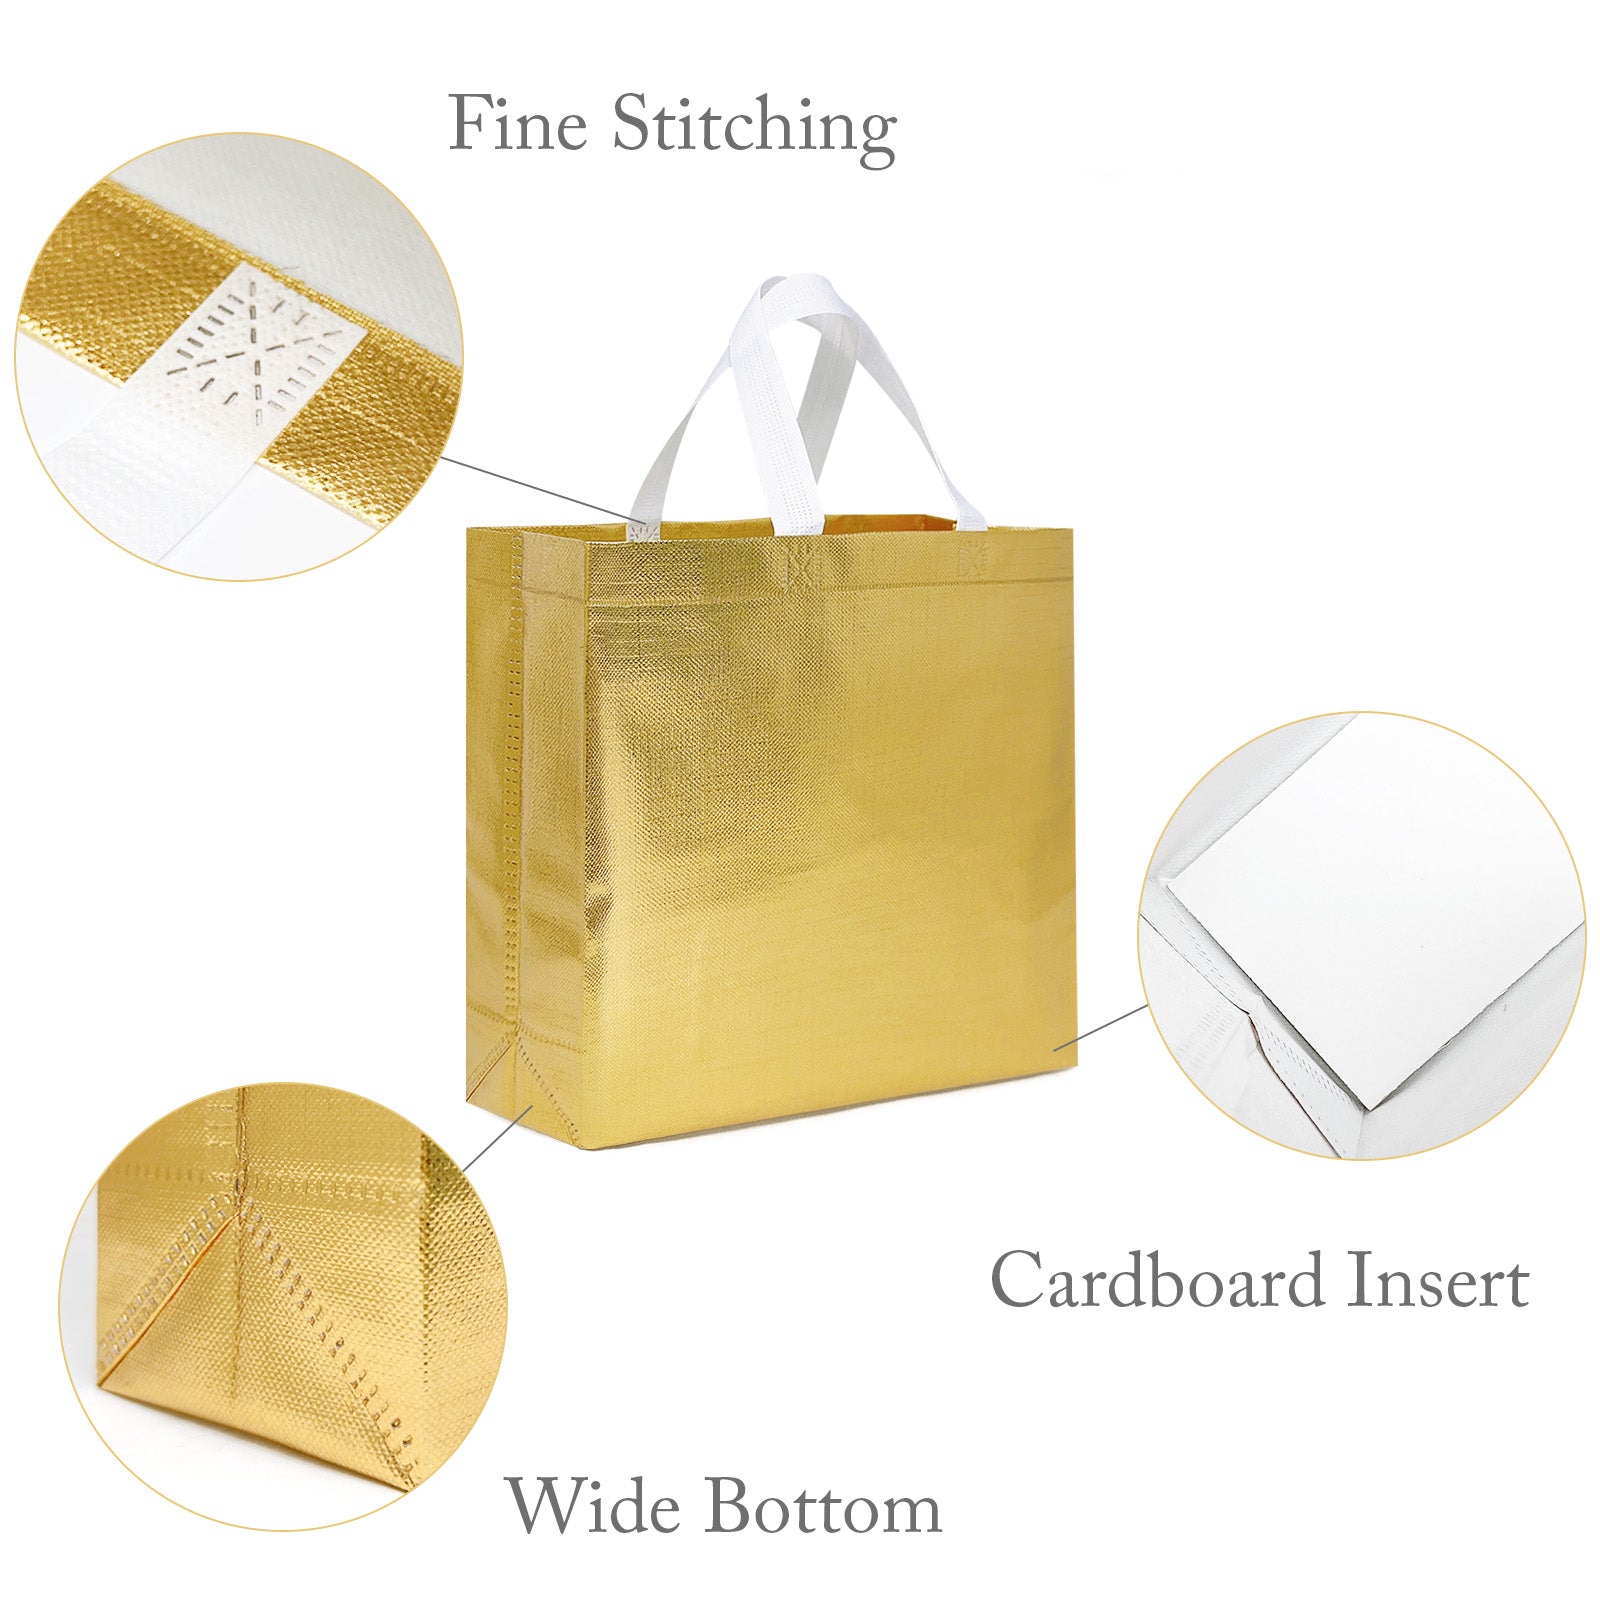 DIY Laced Cardboard Handbags